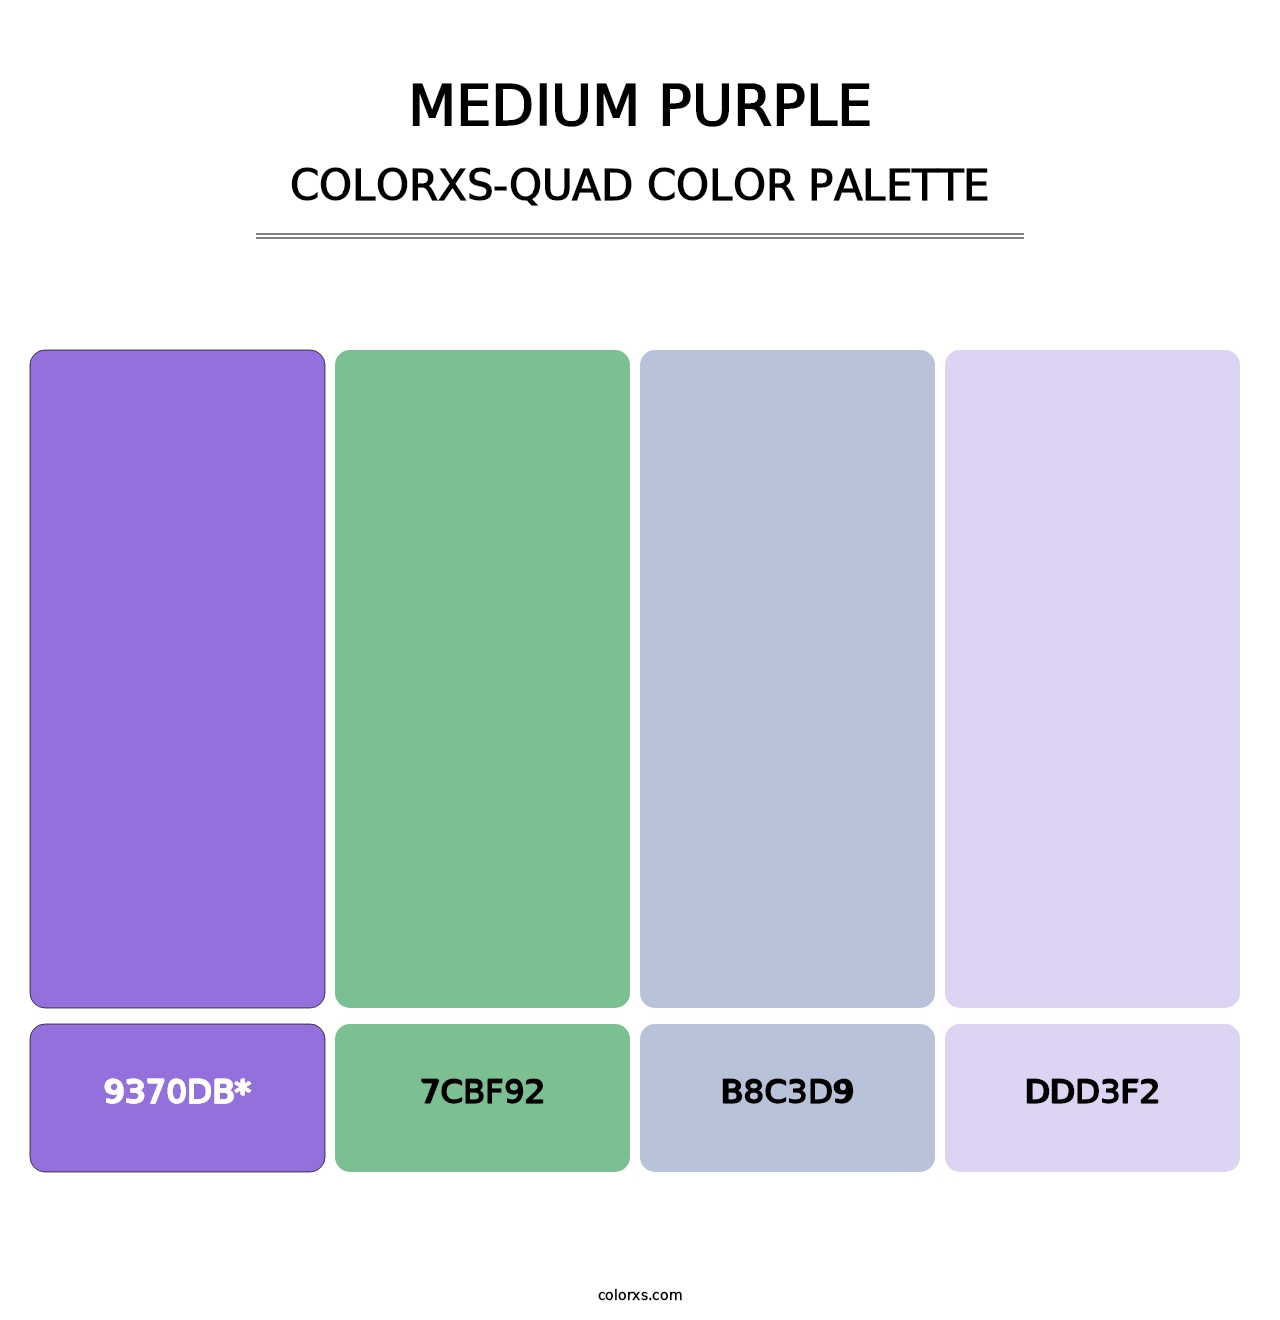 Medium Purple - Colorxs Quad Palette